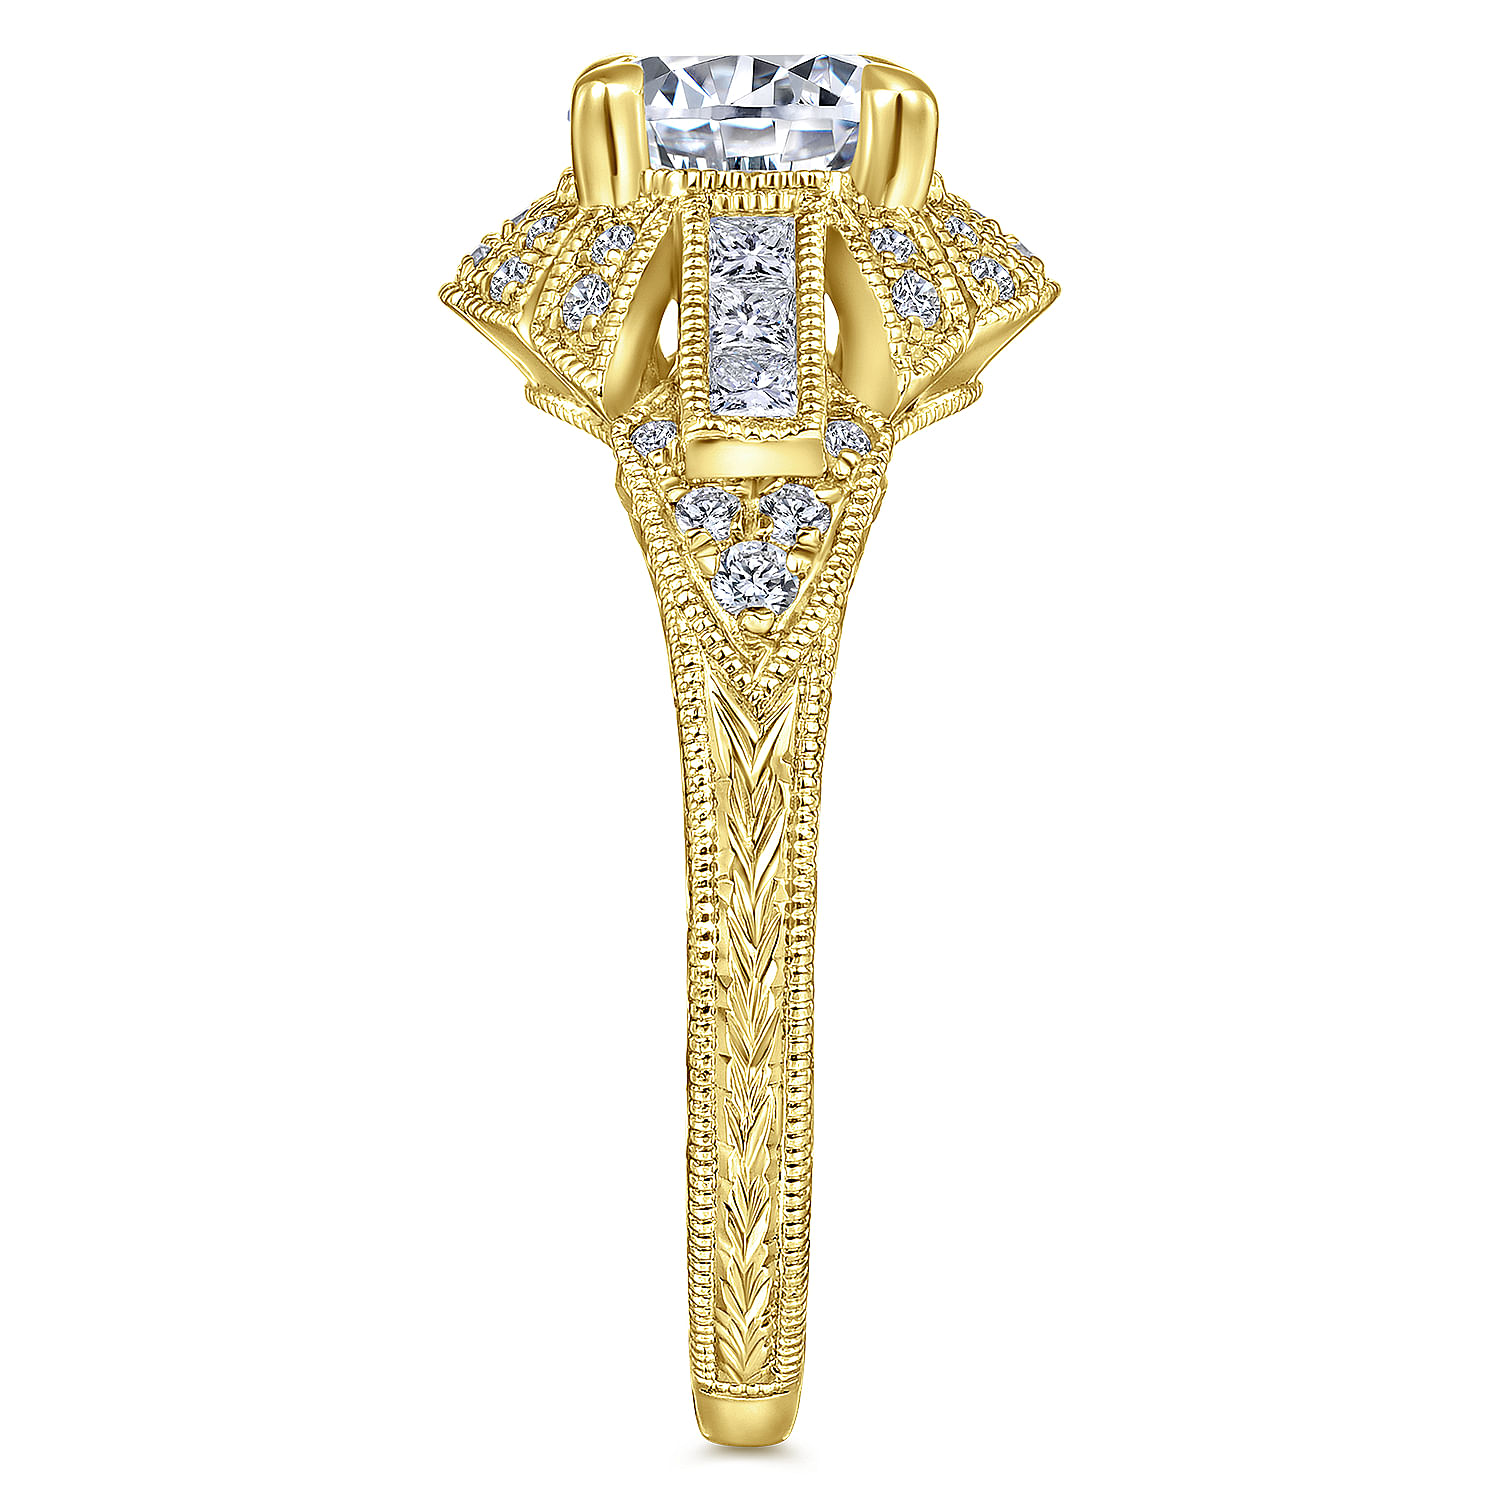 Vintage Inspired 14K Yellow Gold Round Diamond Engagement Ring